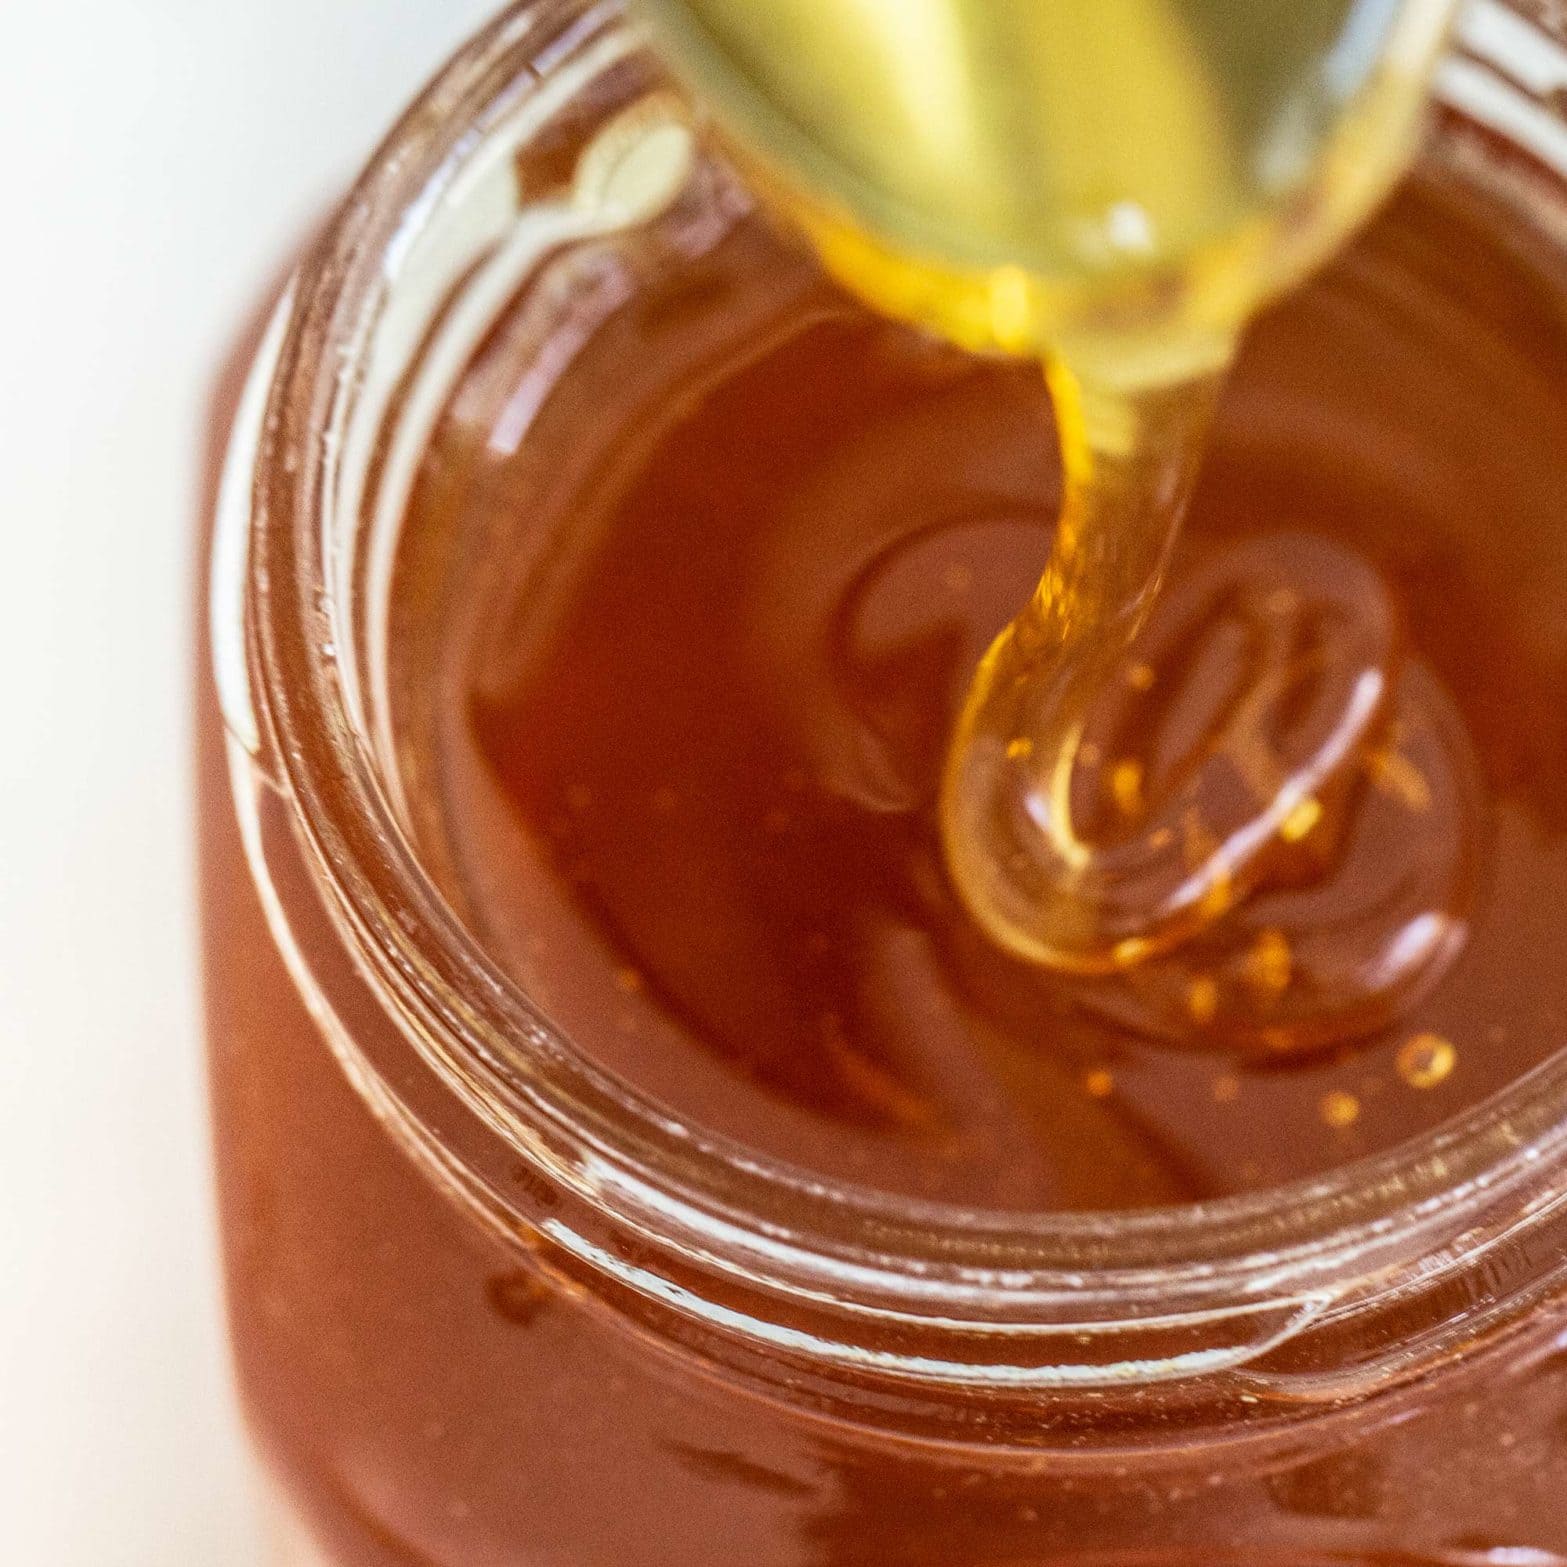 Wildflower US Grade A Honey from Maine – 16oz glass jar